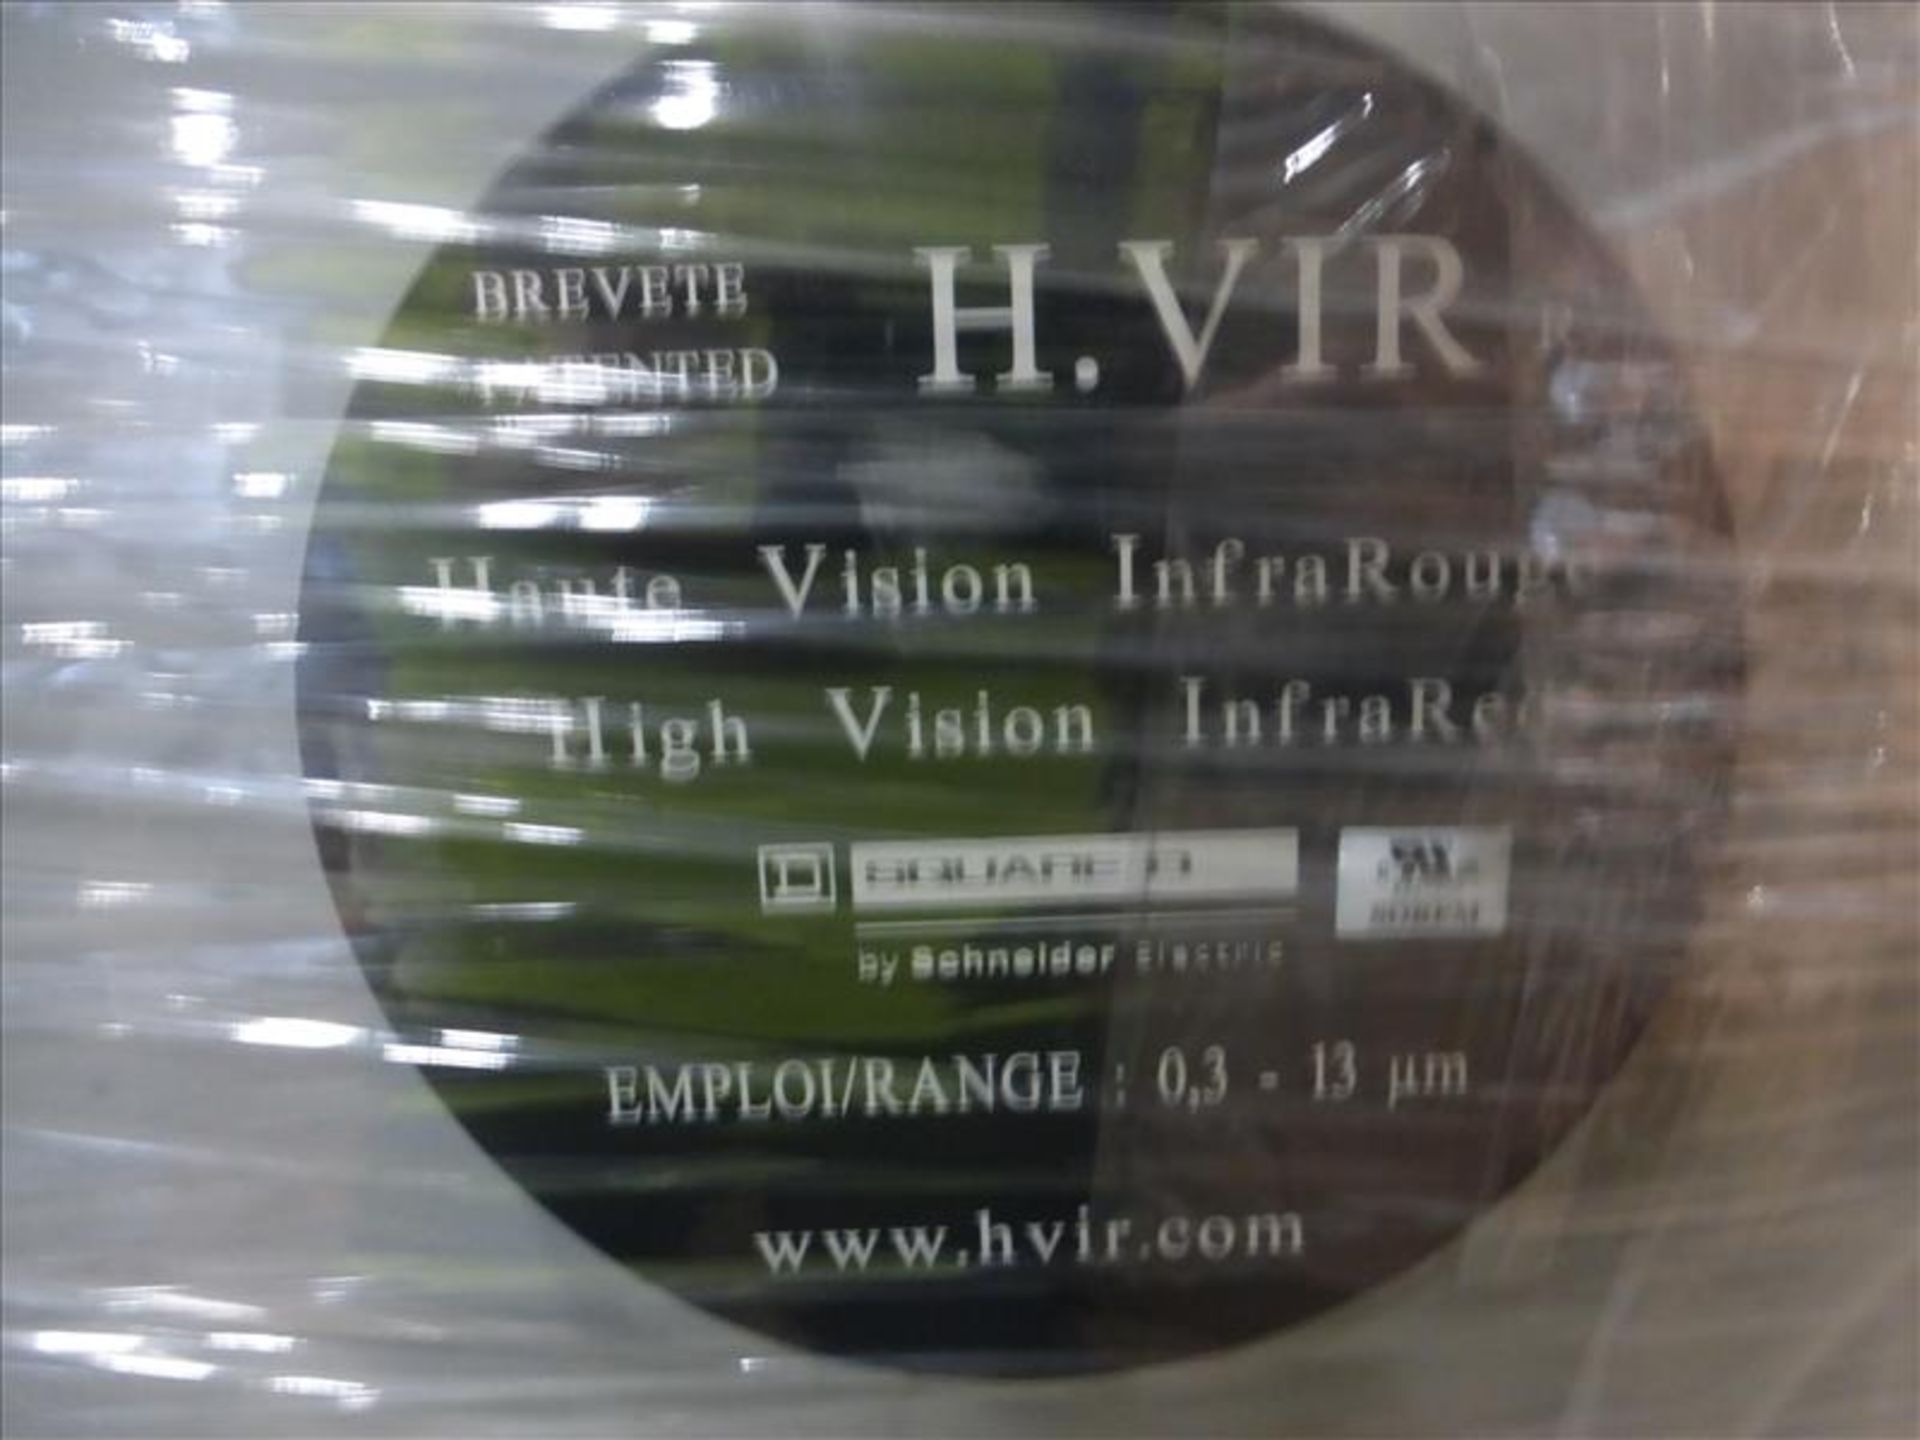 H.Vir High Vision InfraRed Unit (2) InfraRed Units - Bild 3 aus 5